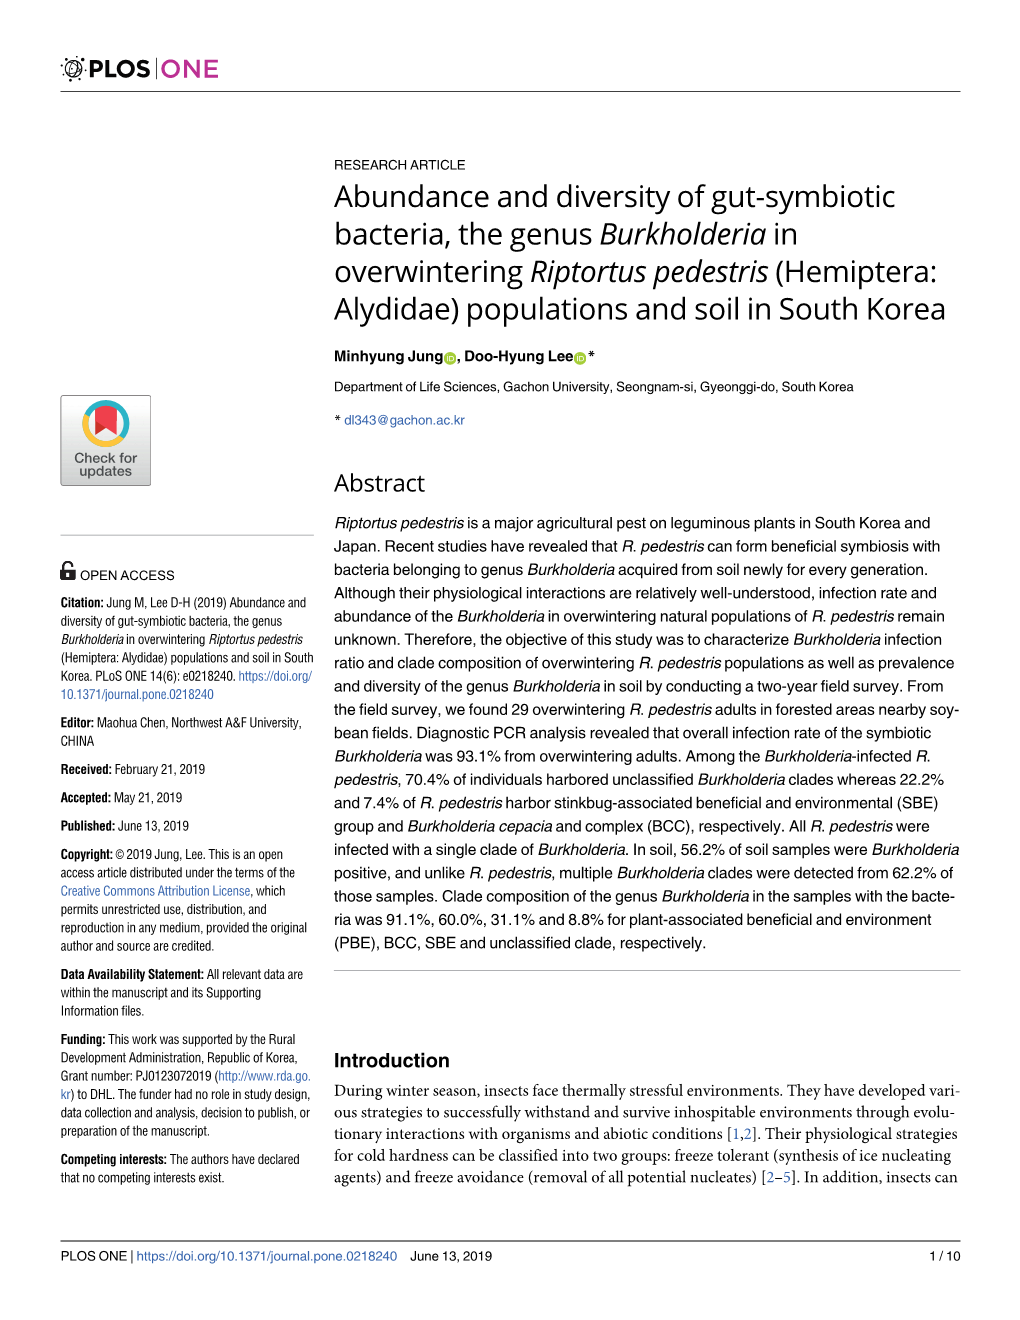 Riptortus Pedestris (Hemiptera: Alydidae) Populations and Soil in South Korea